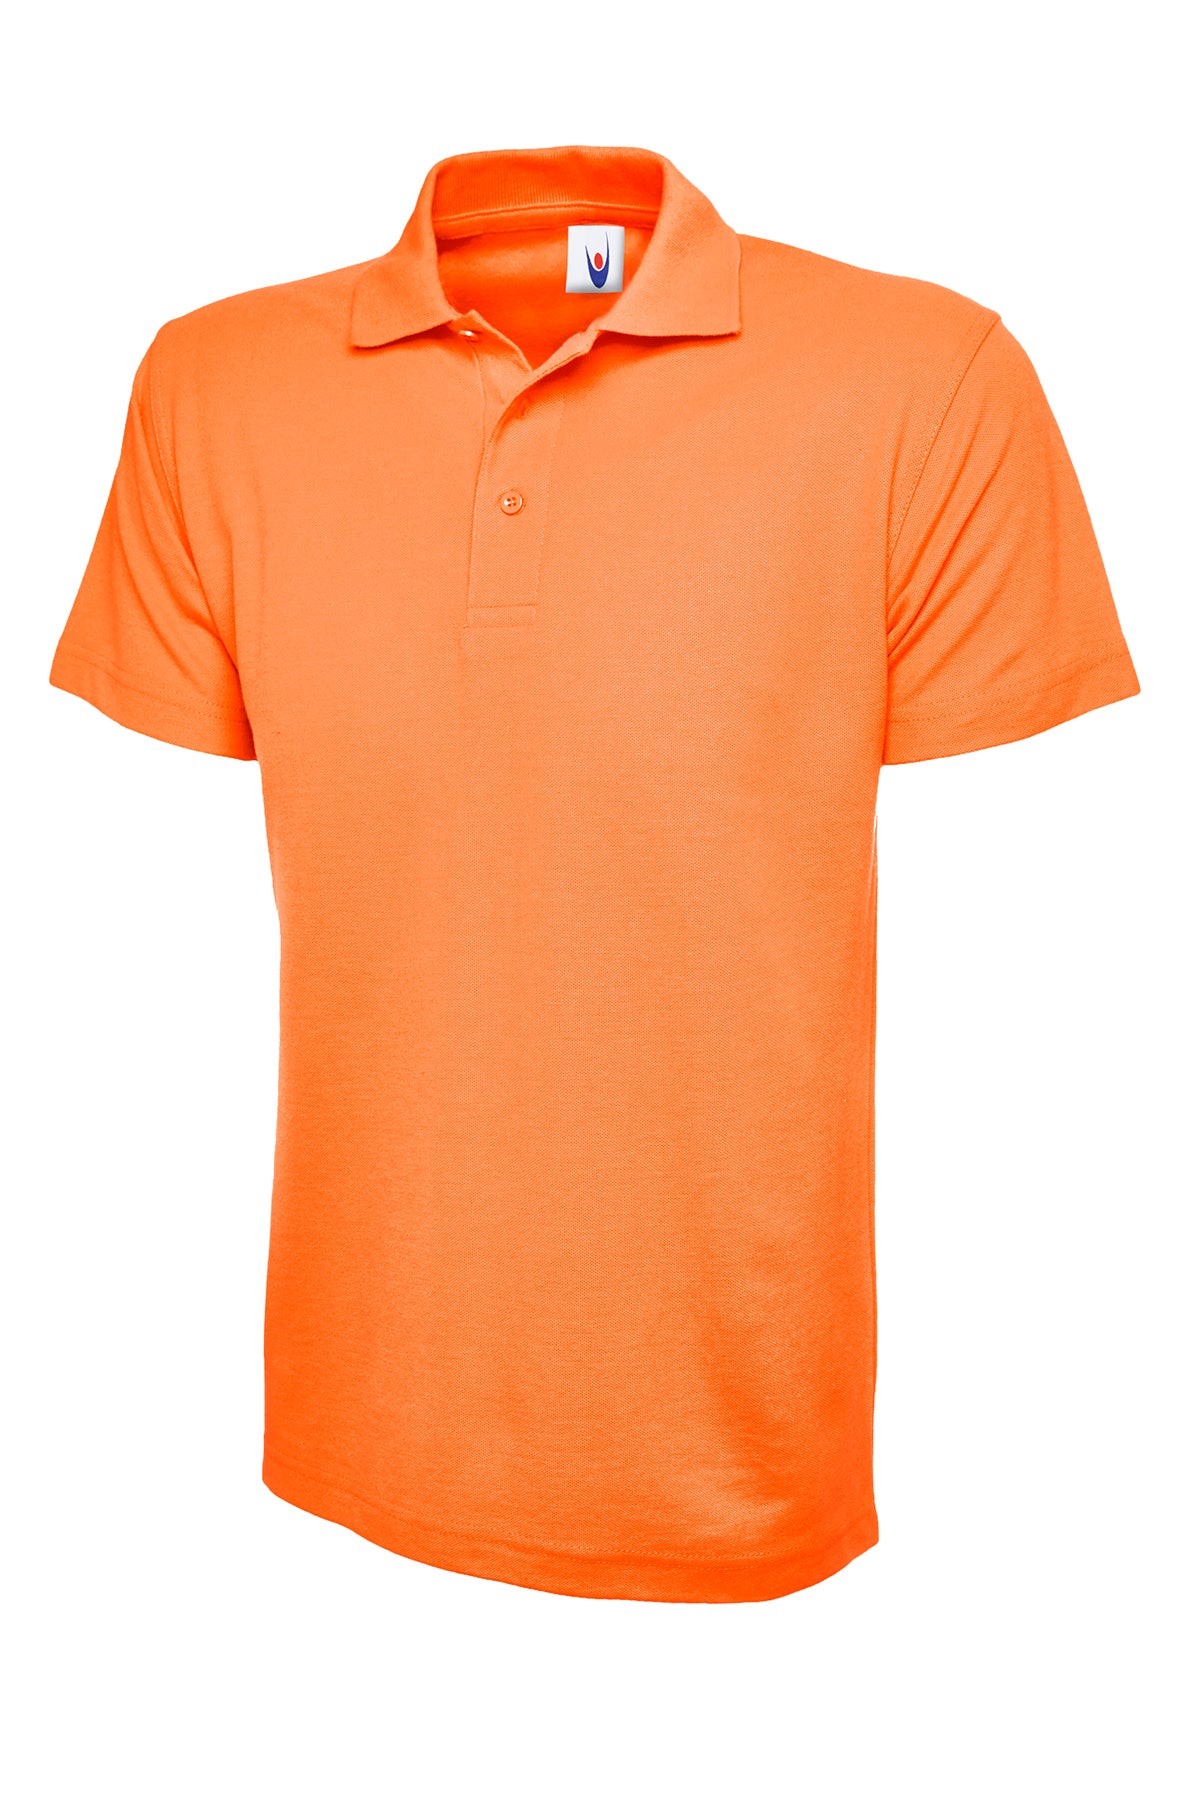 Uneek Classic Polo Shirt - ORANGE - Medium